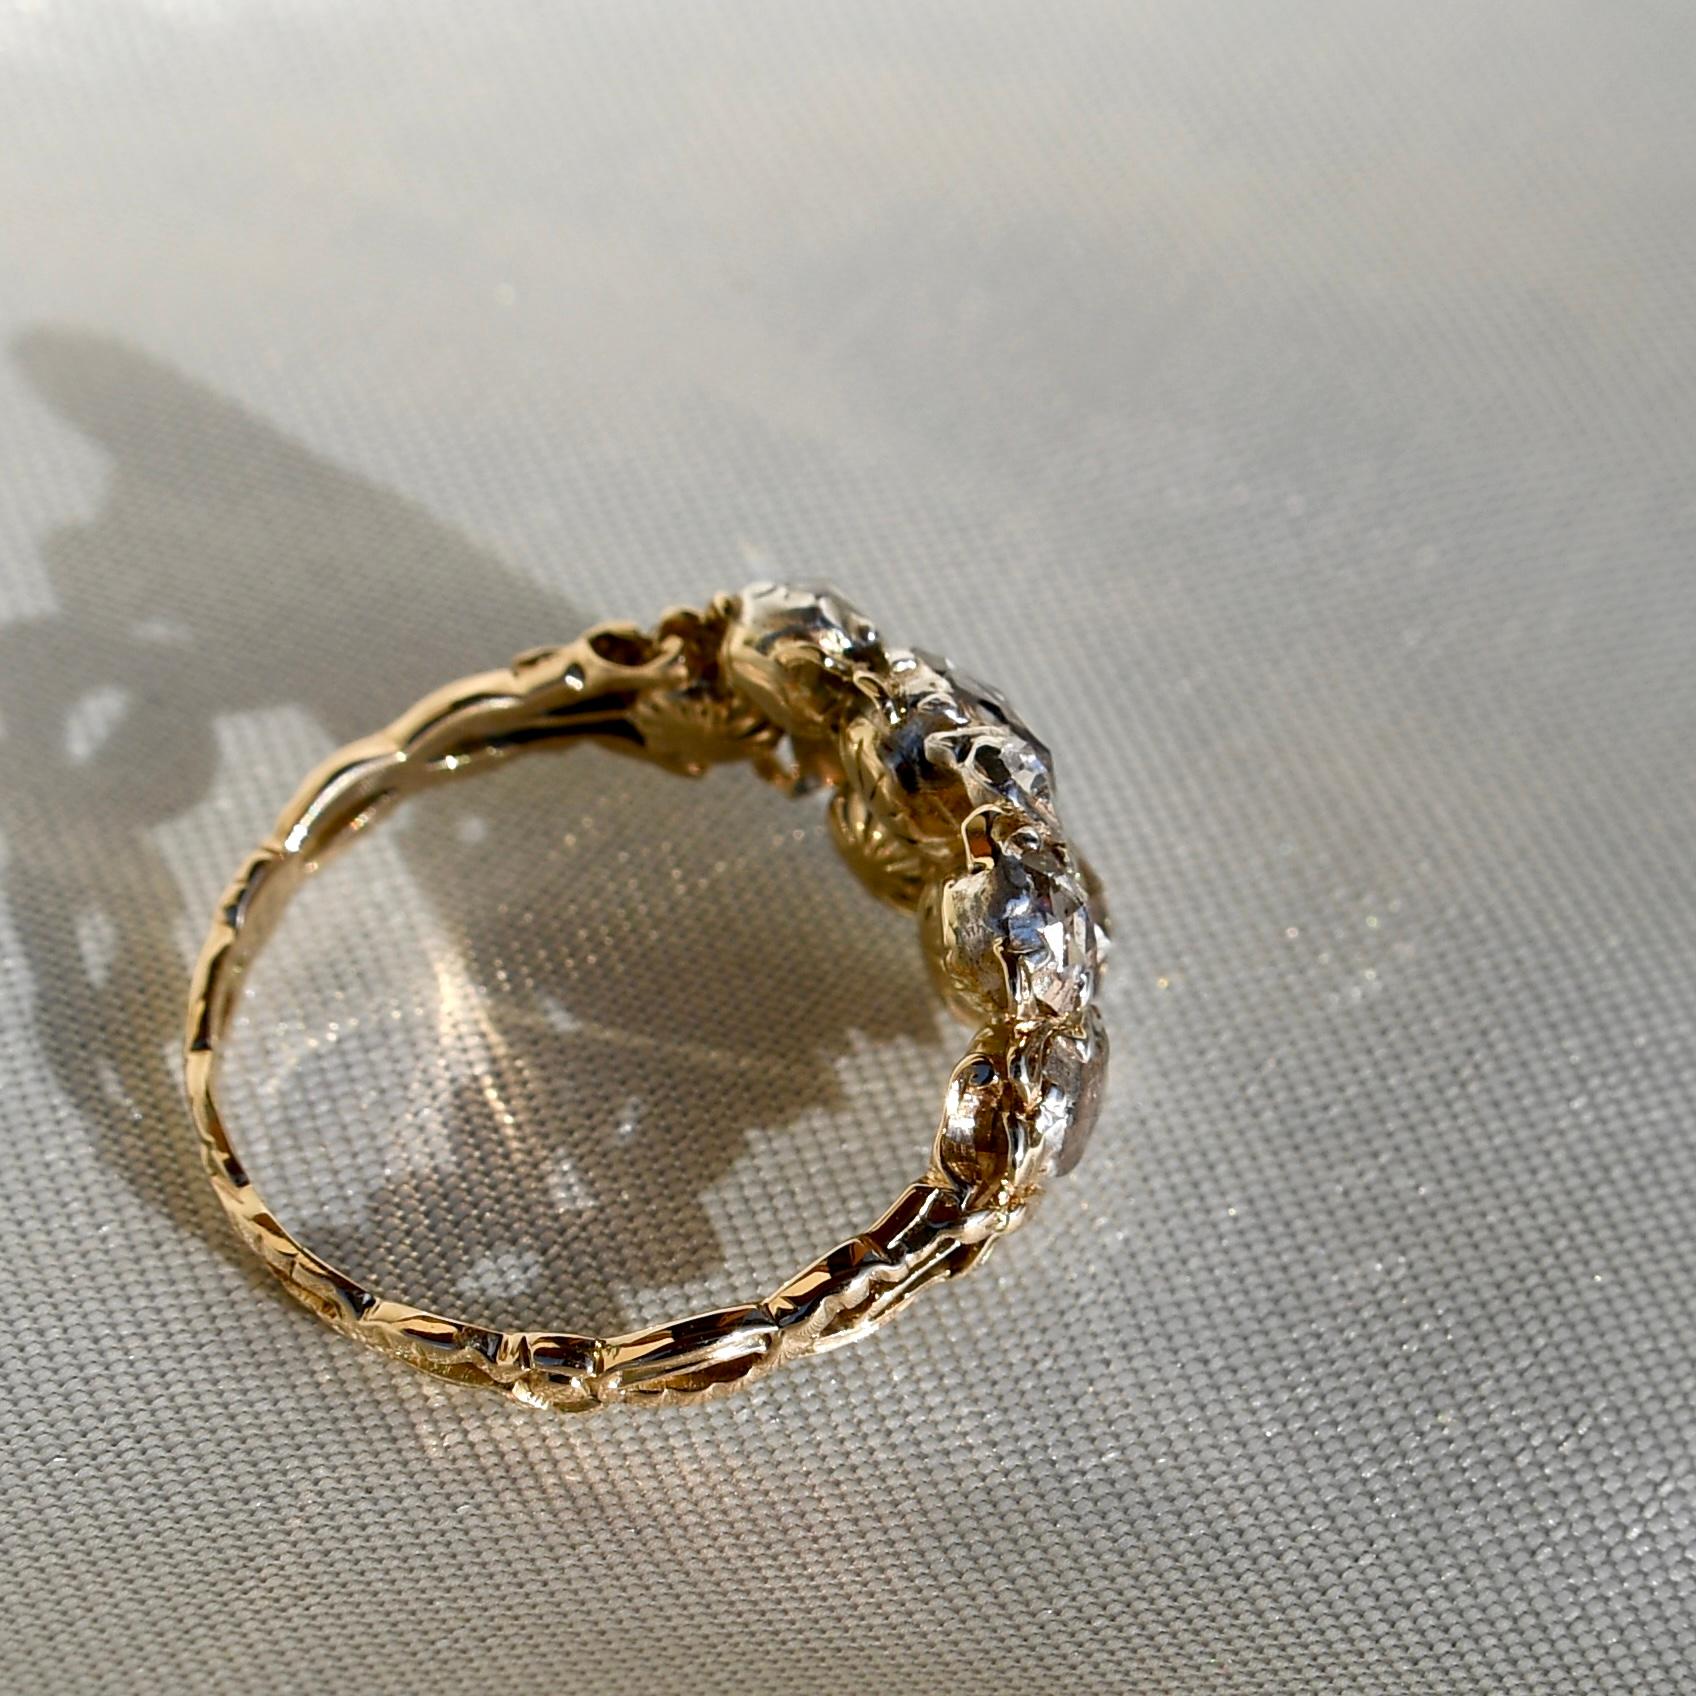 Antique Rococo rose cut diamond Giardinetti ring, France around 1760 2